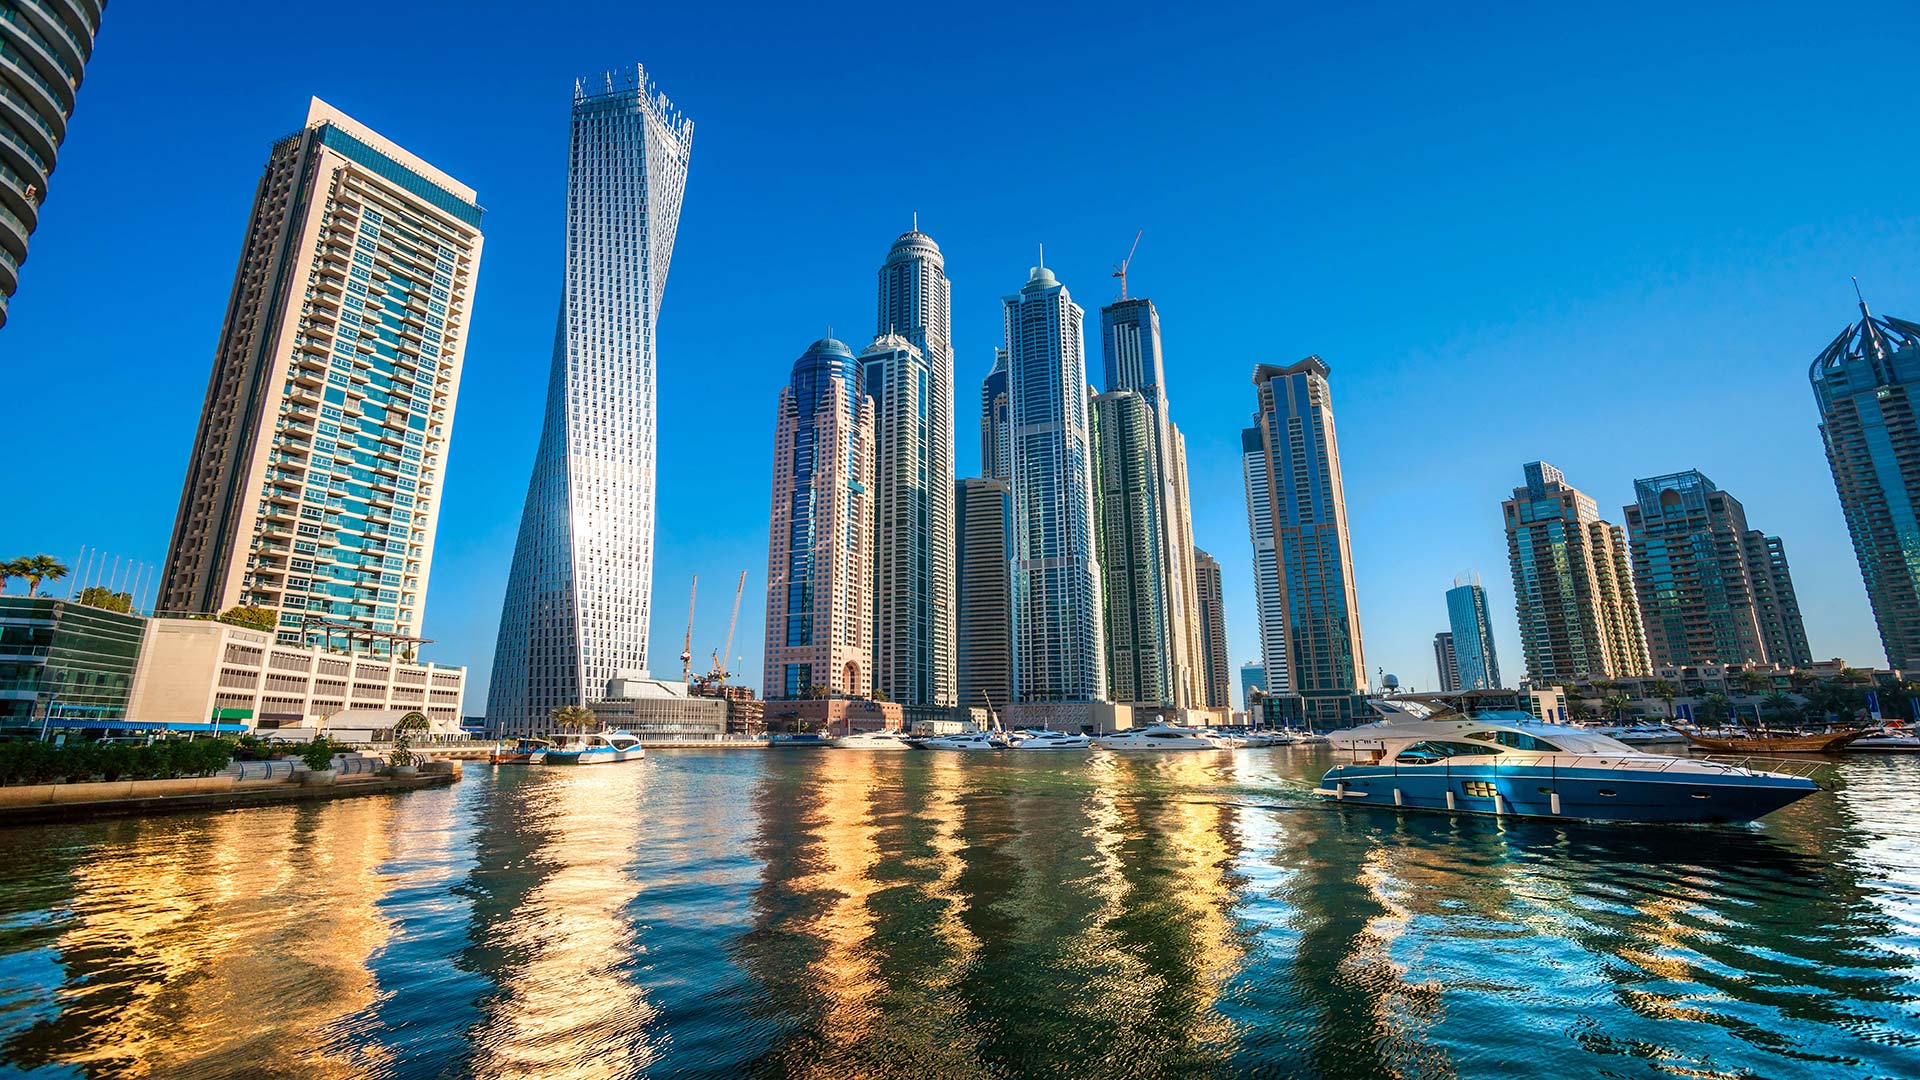 MARINA SHORES by Emaar Properties in Dubai Marina, Dubai, UAE - 2